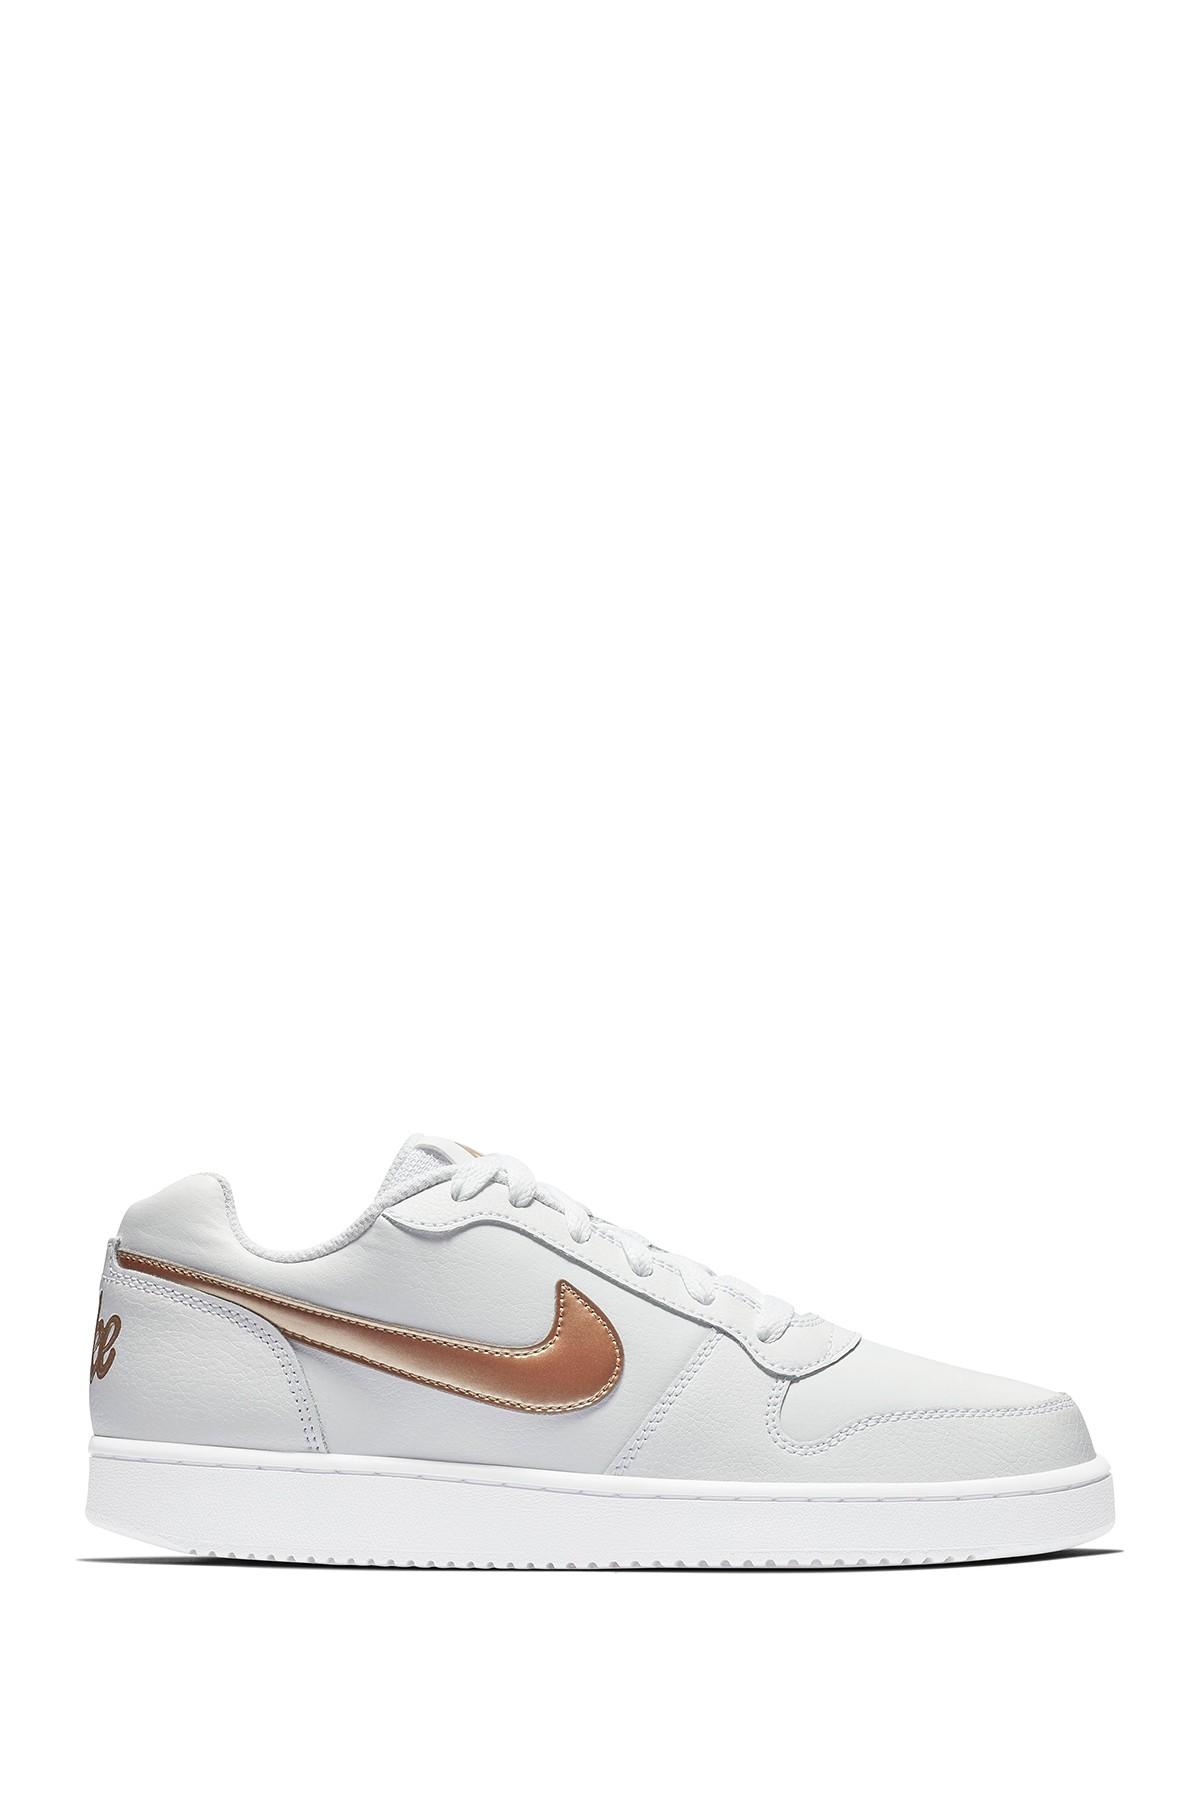 Nike Ebernon Low Sneaker in White - Lyst